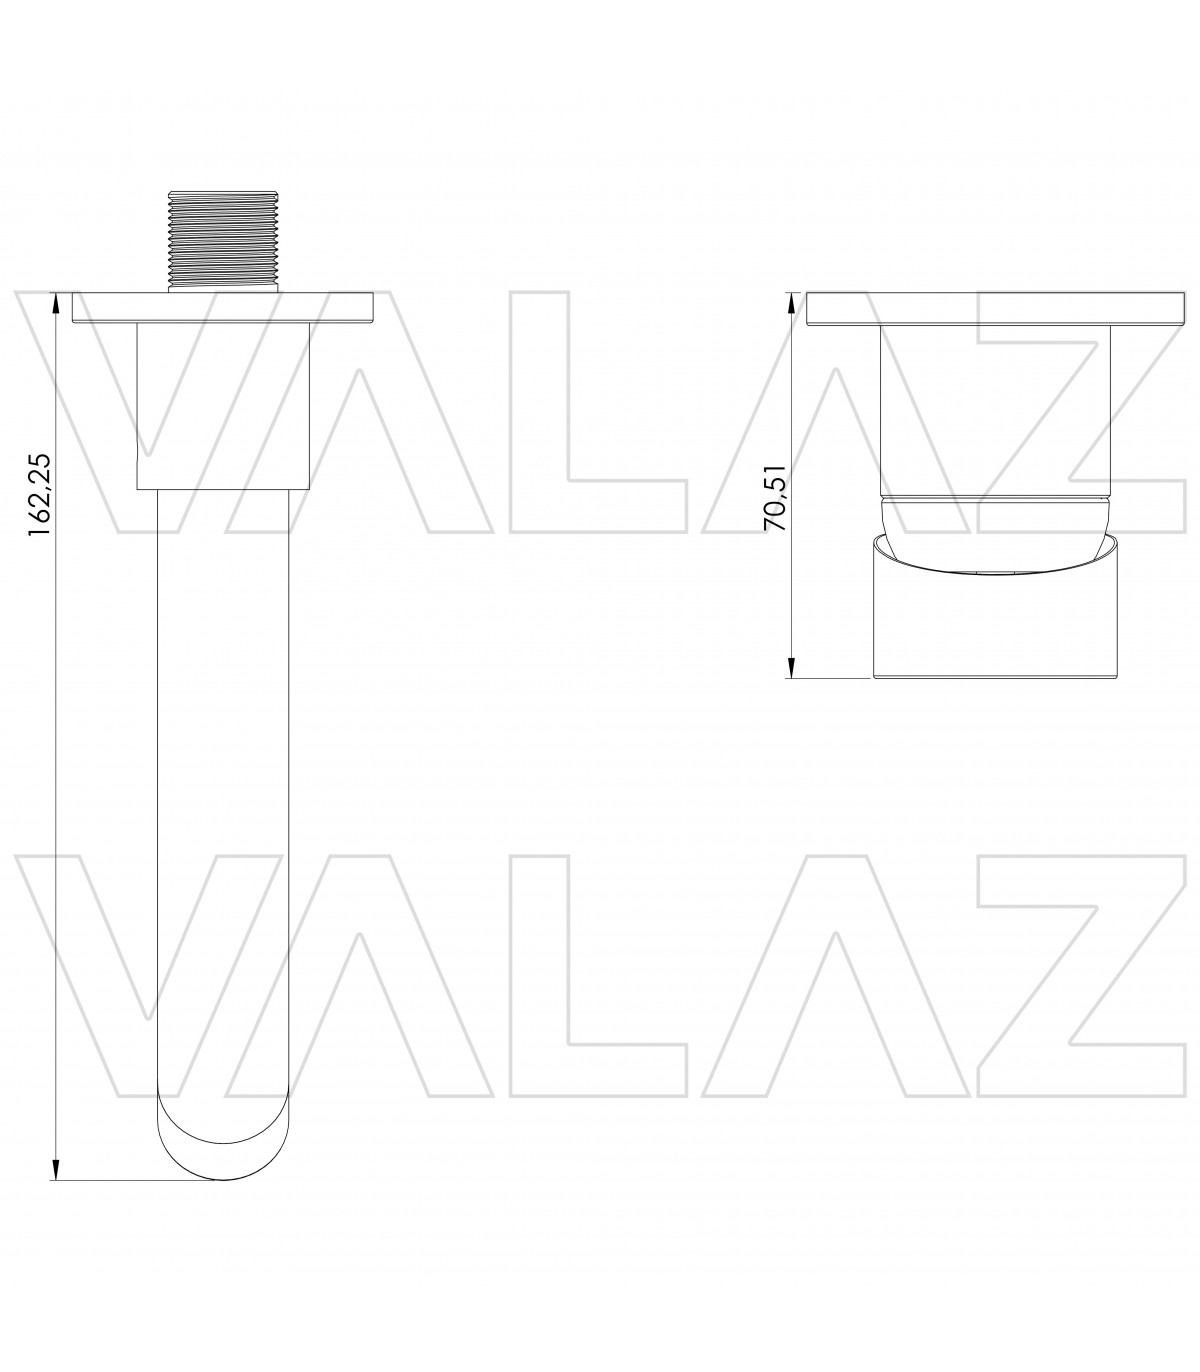 Grifo de lavabo empotrado redondo caño recto Dorado cepillado Serie  Guadalquivir – VALAZ – Fabricación y comercialización de grifería